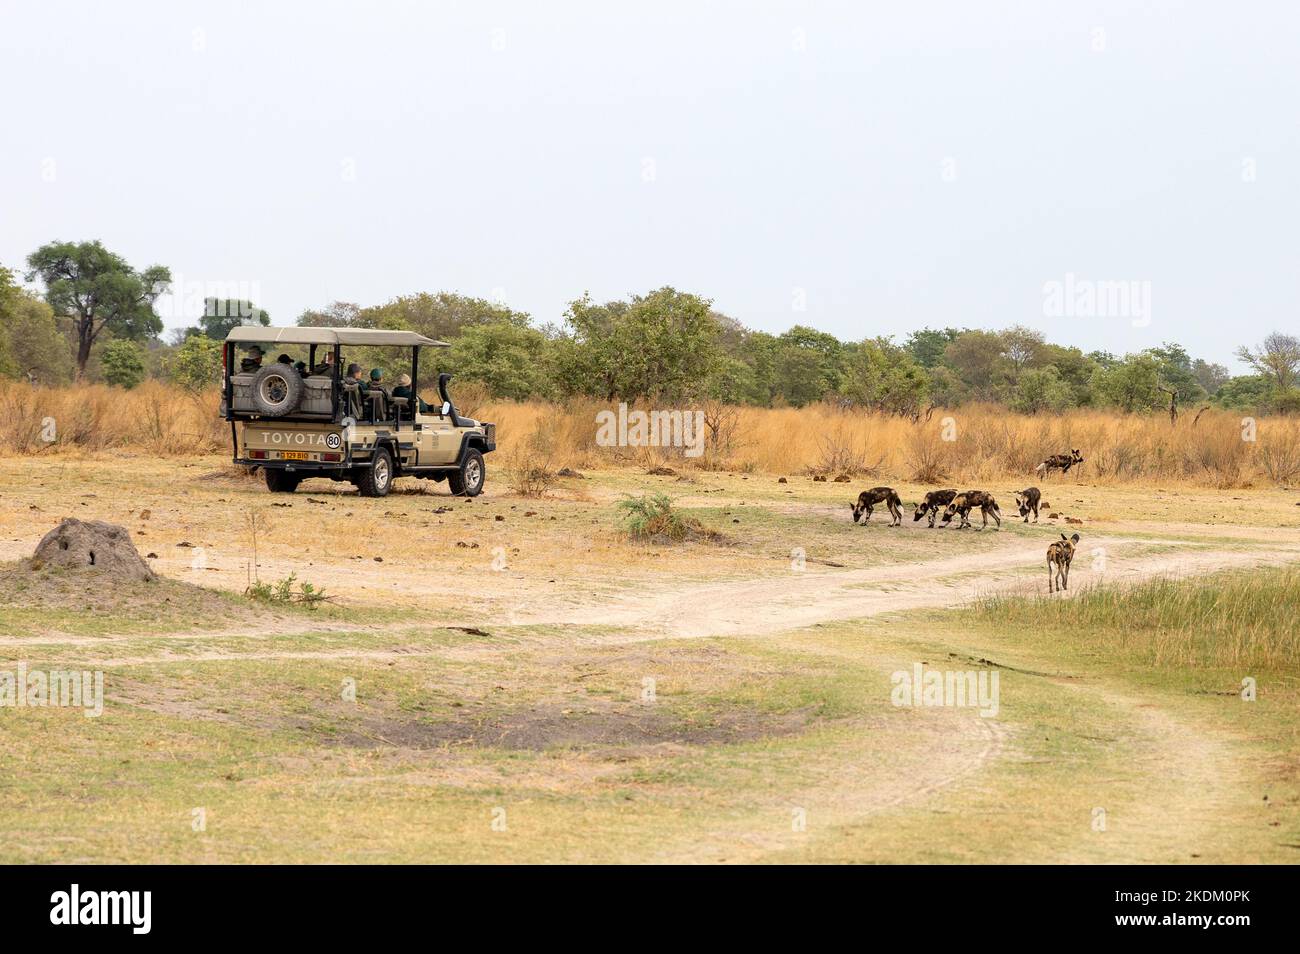 Jeep Safari Africa - tourists watching African Wild Dogs on a safari holiday; Moremi Game Reserve, Okavango Delta, Botswana Africa. Travel. Stock Photo